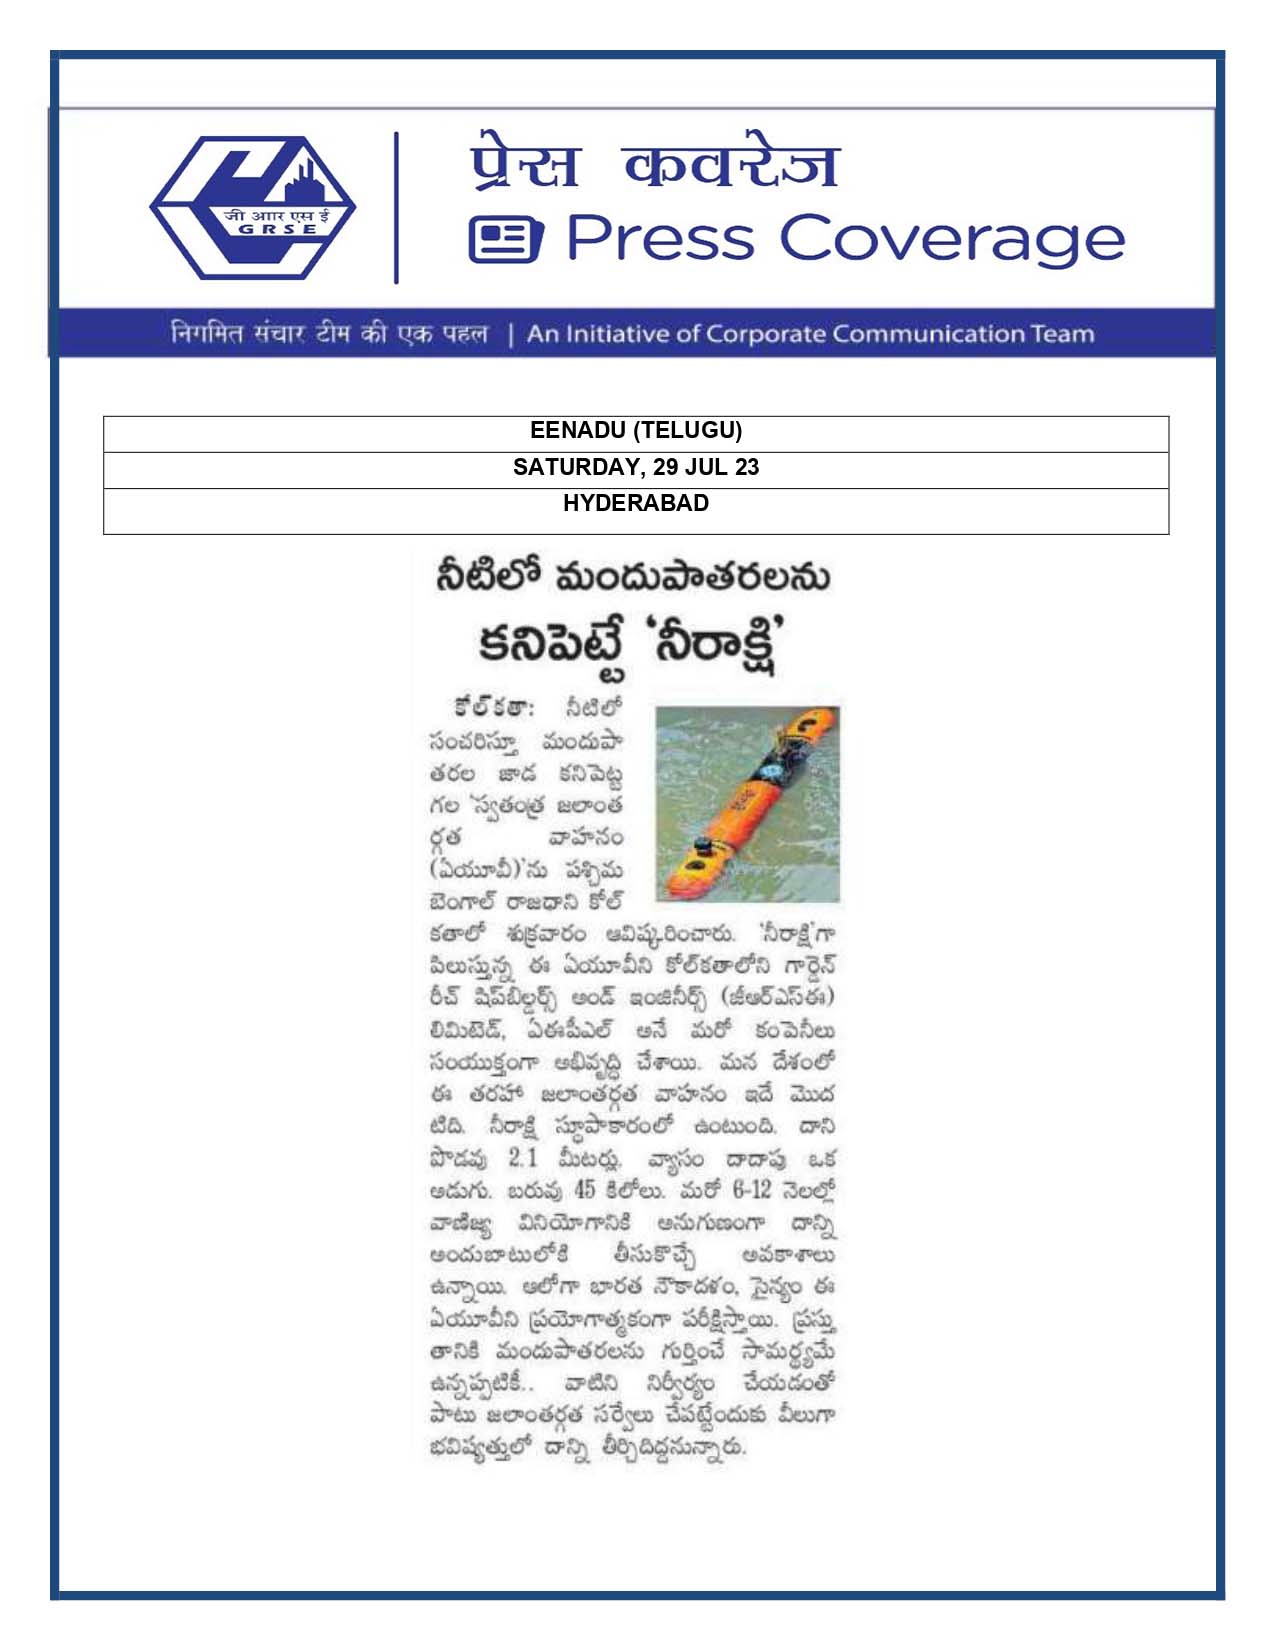 Press Coverage : Eenadu(Tamil), 29 Jul 23 : Mine Detector AUV Launched